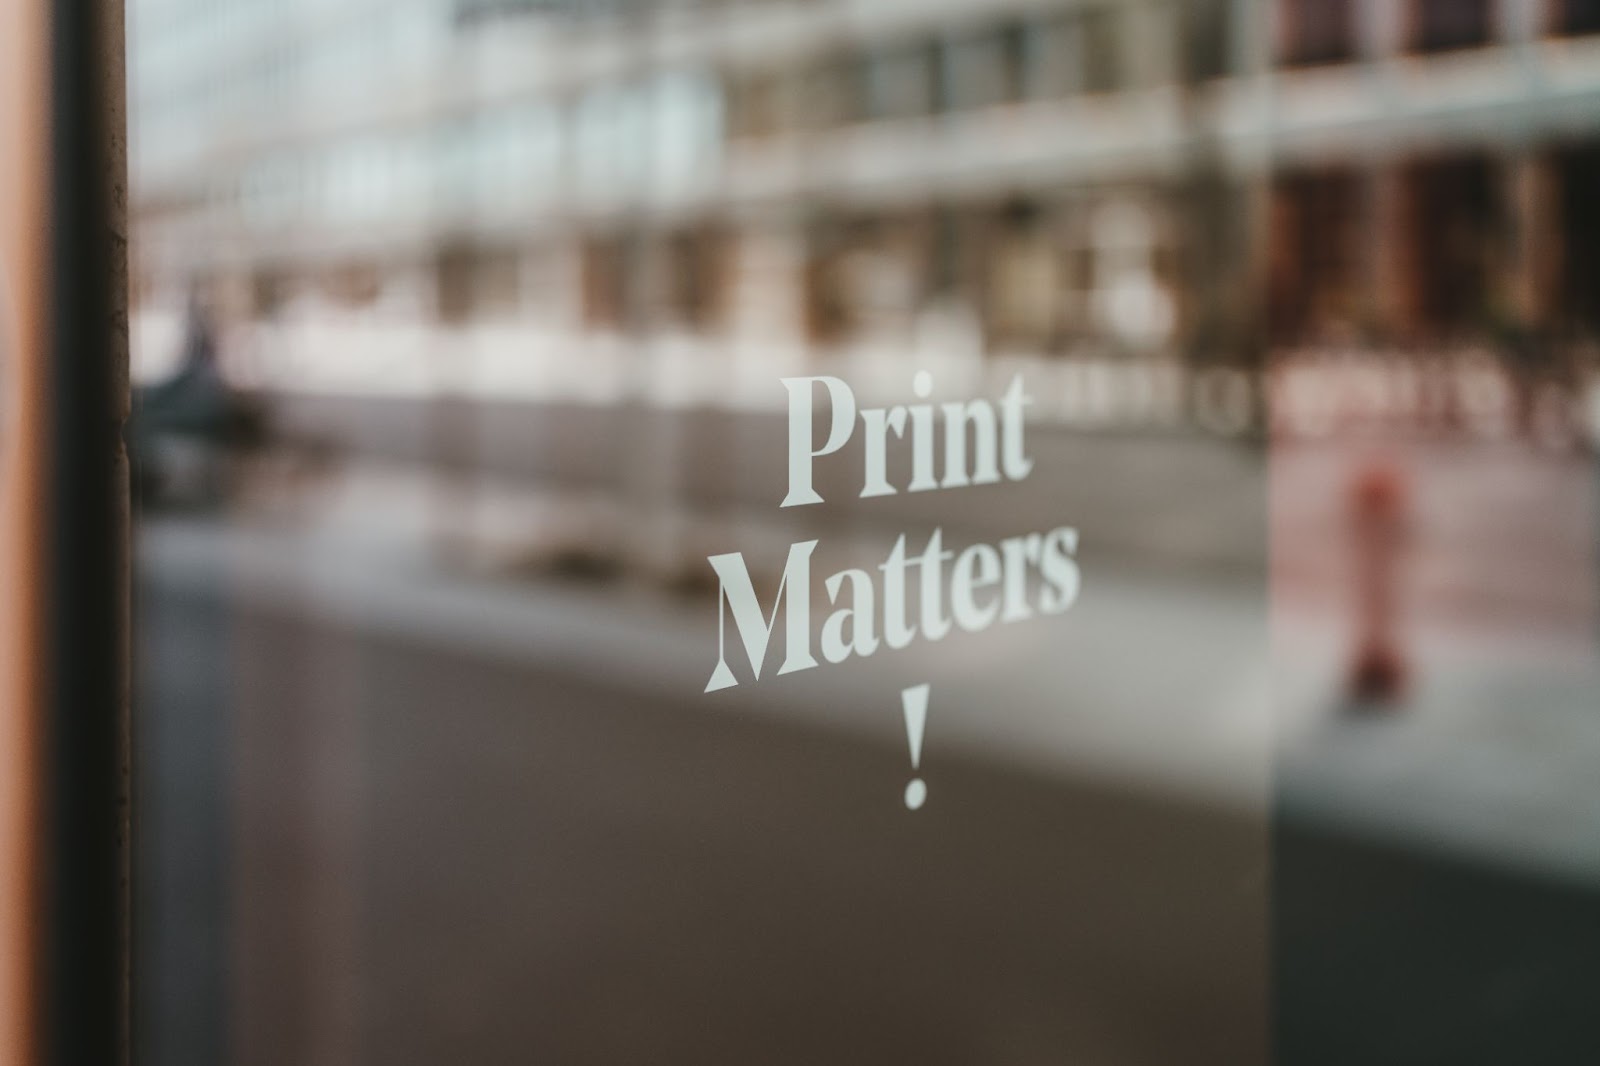 Print Matters sticker on a window